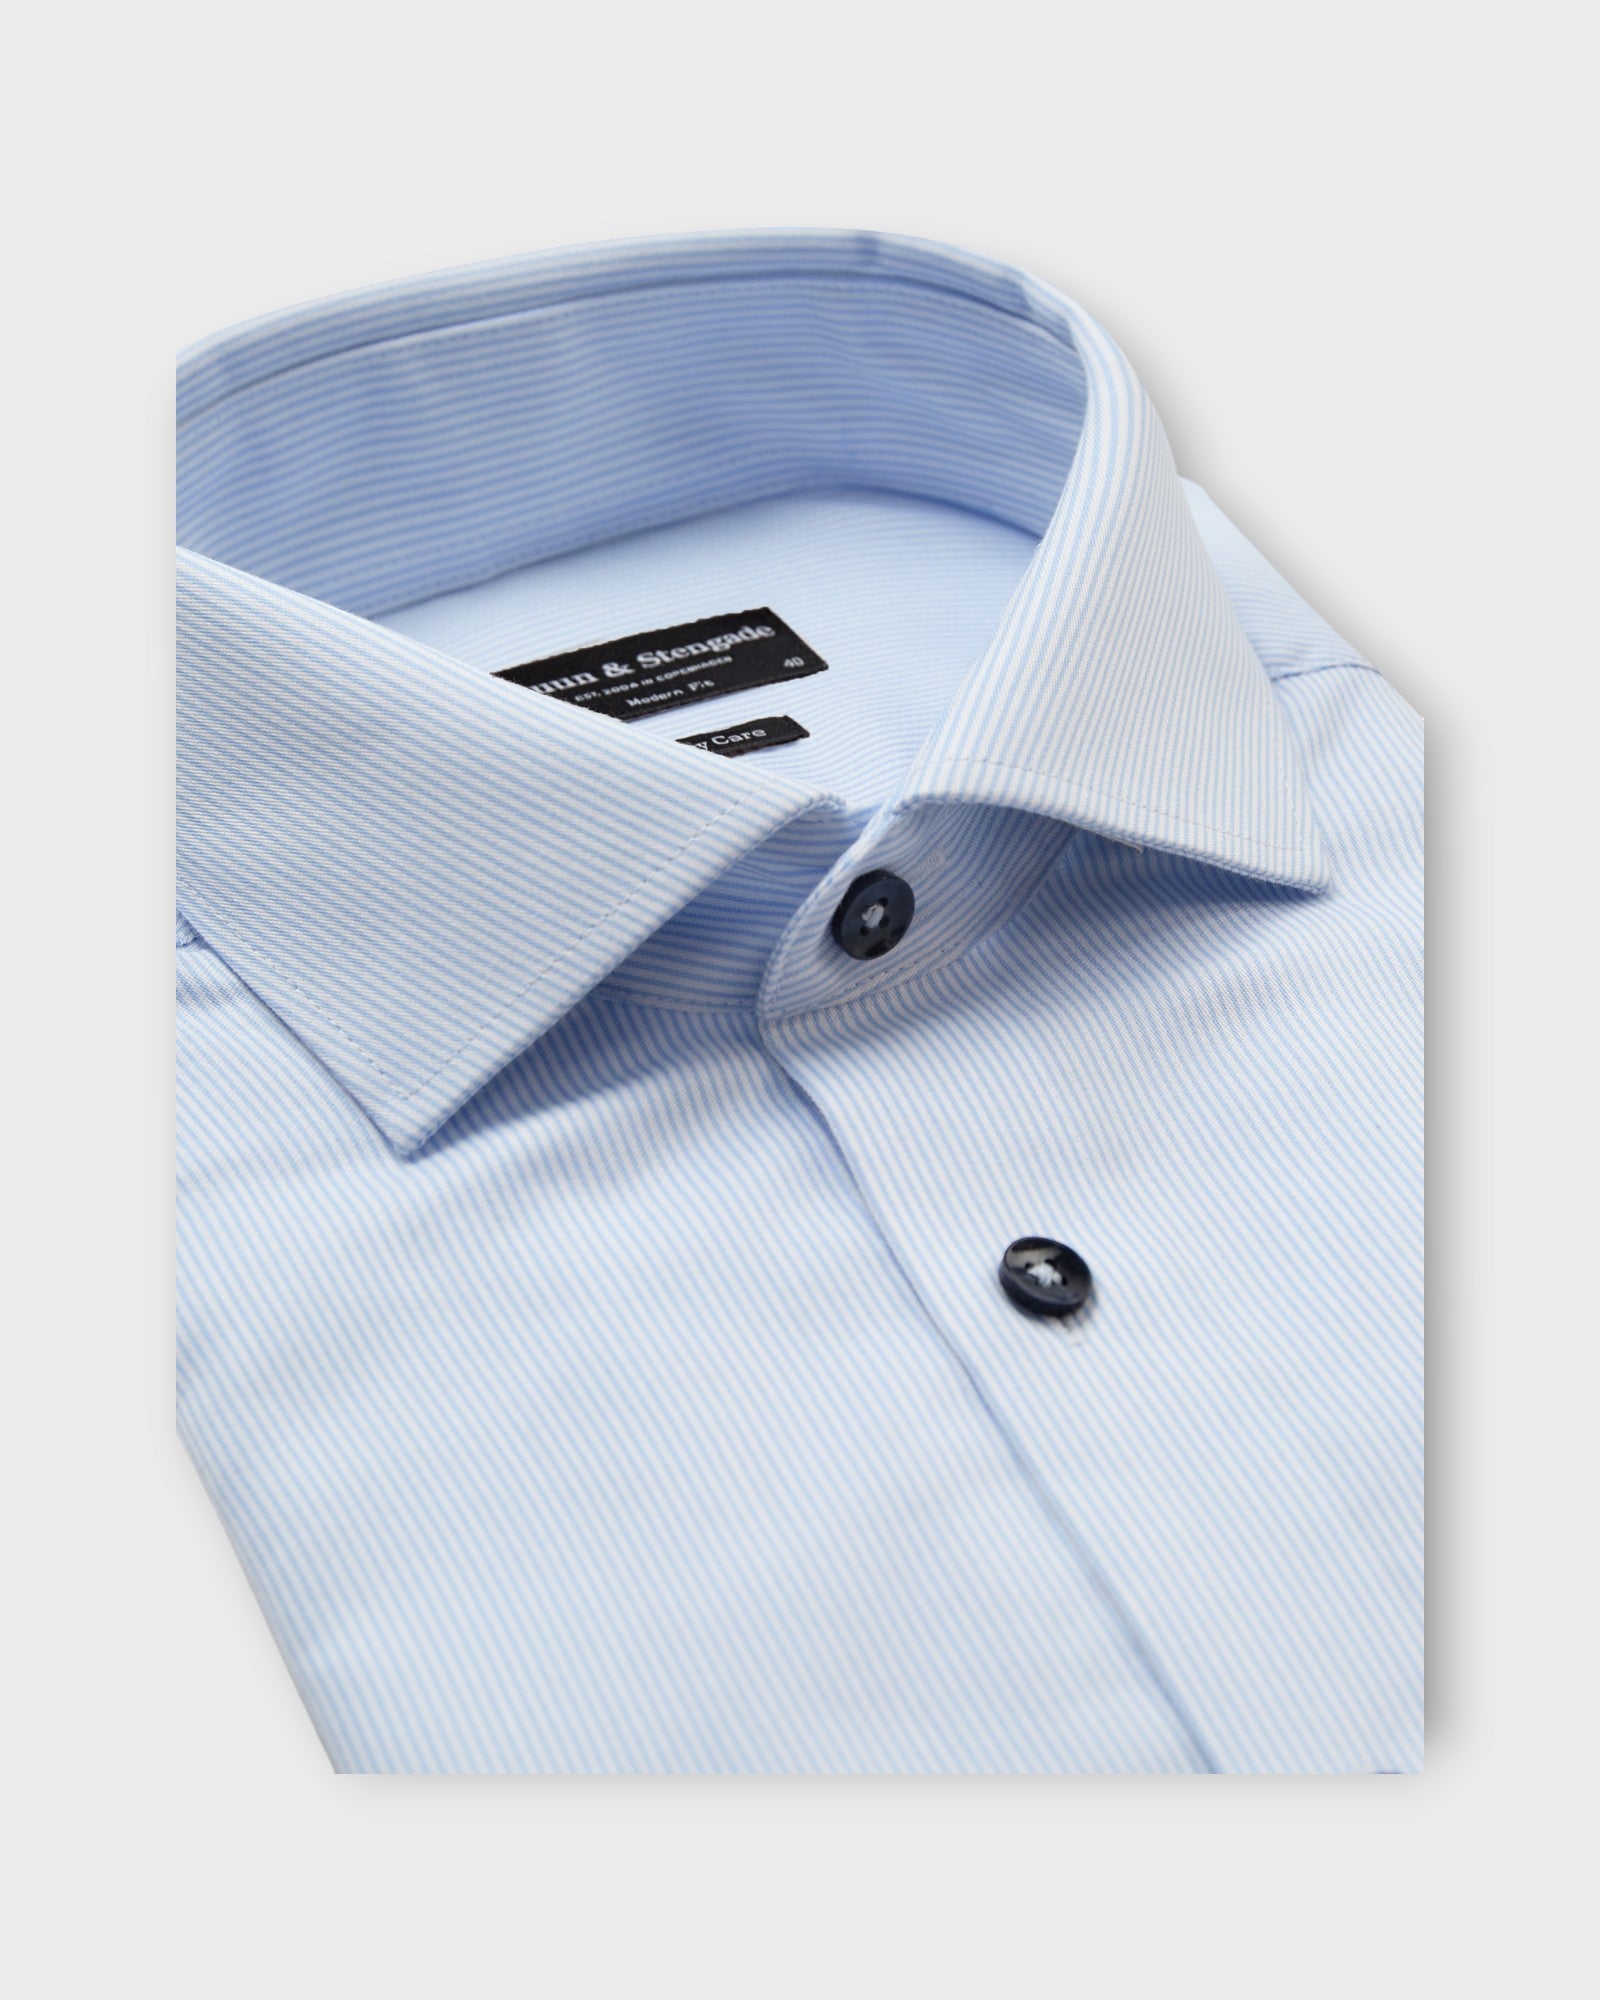 Seau Modern Fit Shirt Light Blue/White fra Bruun og Stengade. Blå og hvid stribet langærmet herre skjorte. Her set i closeup.